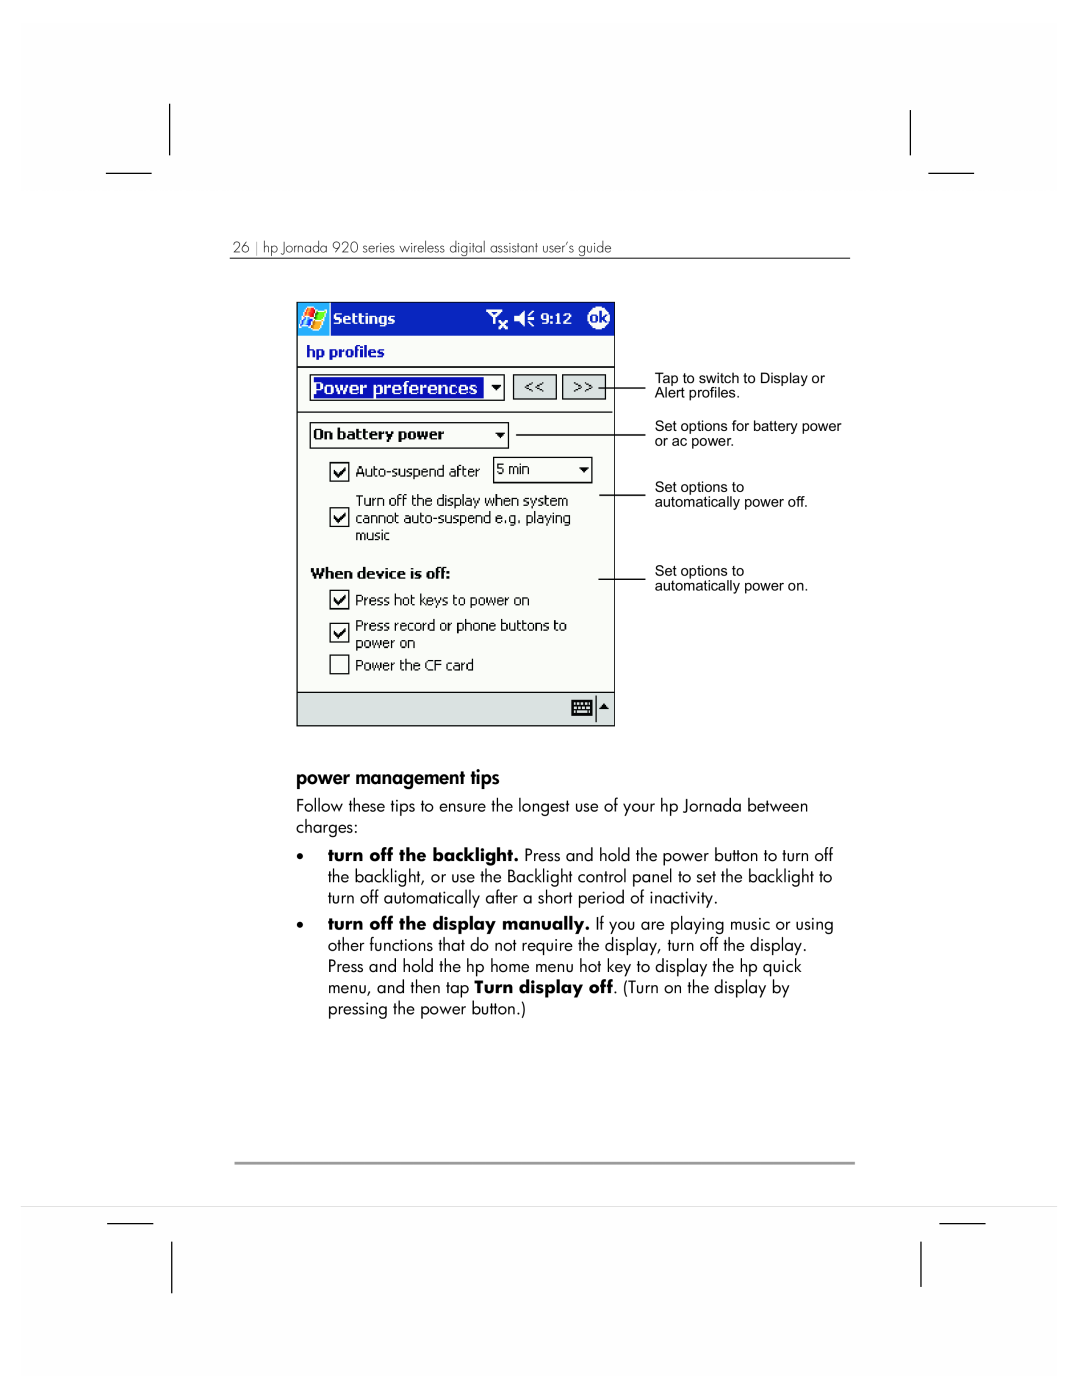 HP manual power management tips, hp Jornada 920 series wireless digital assistant user’s guide 